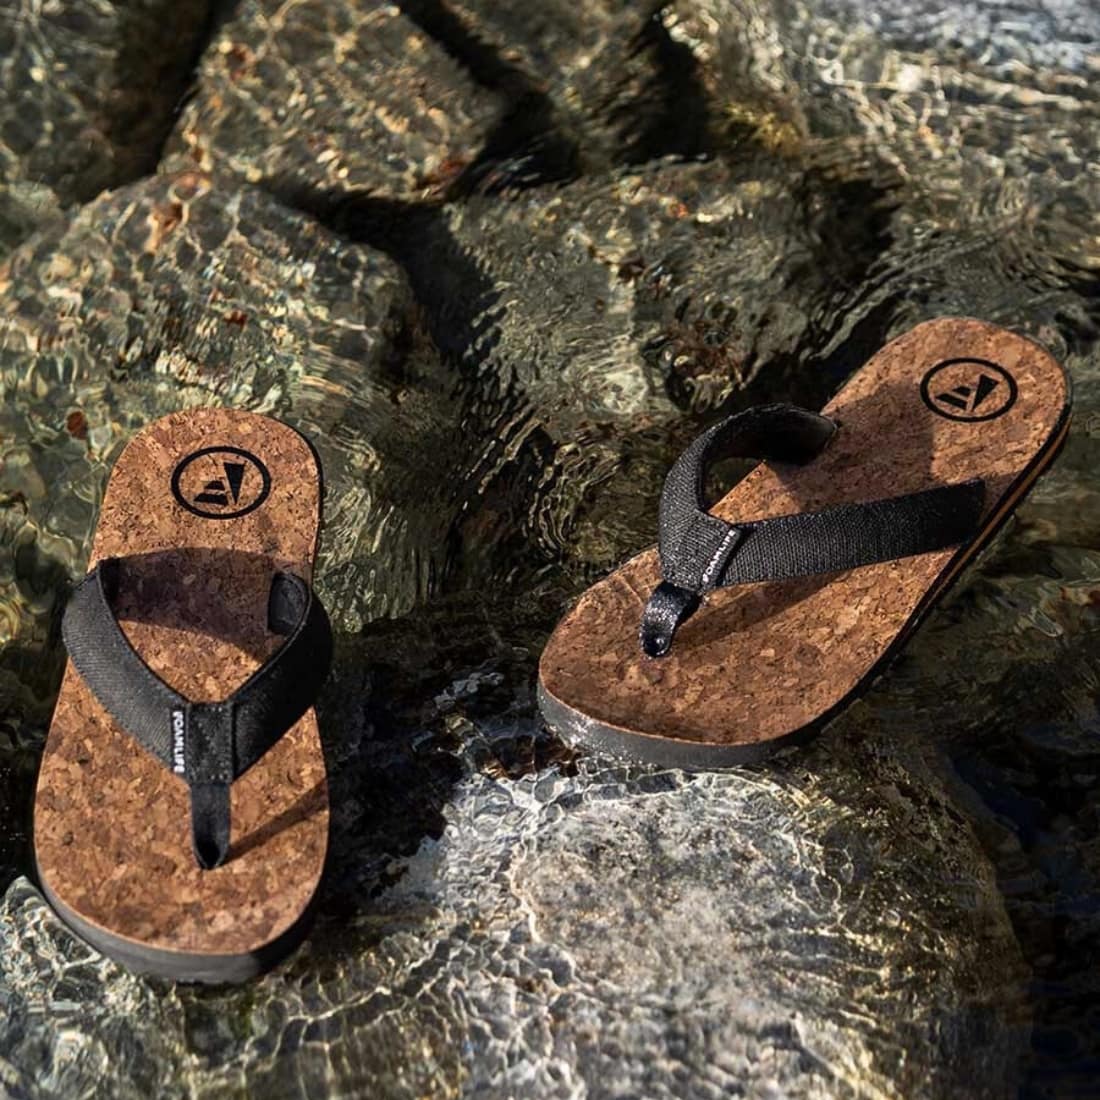 Foamlife Mully Cork Flip Flop Sandals - Black